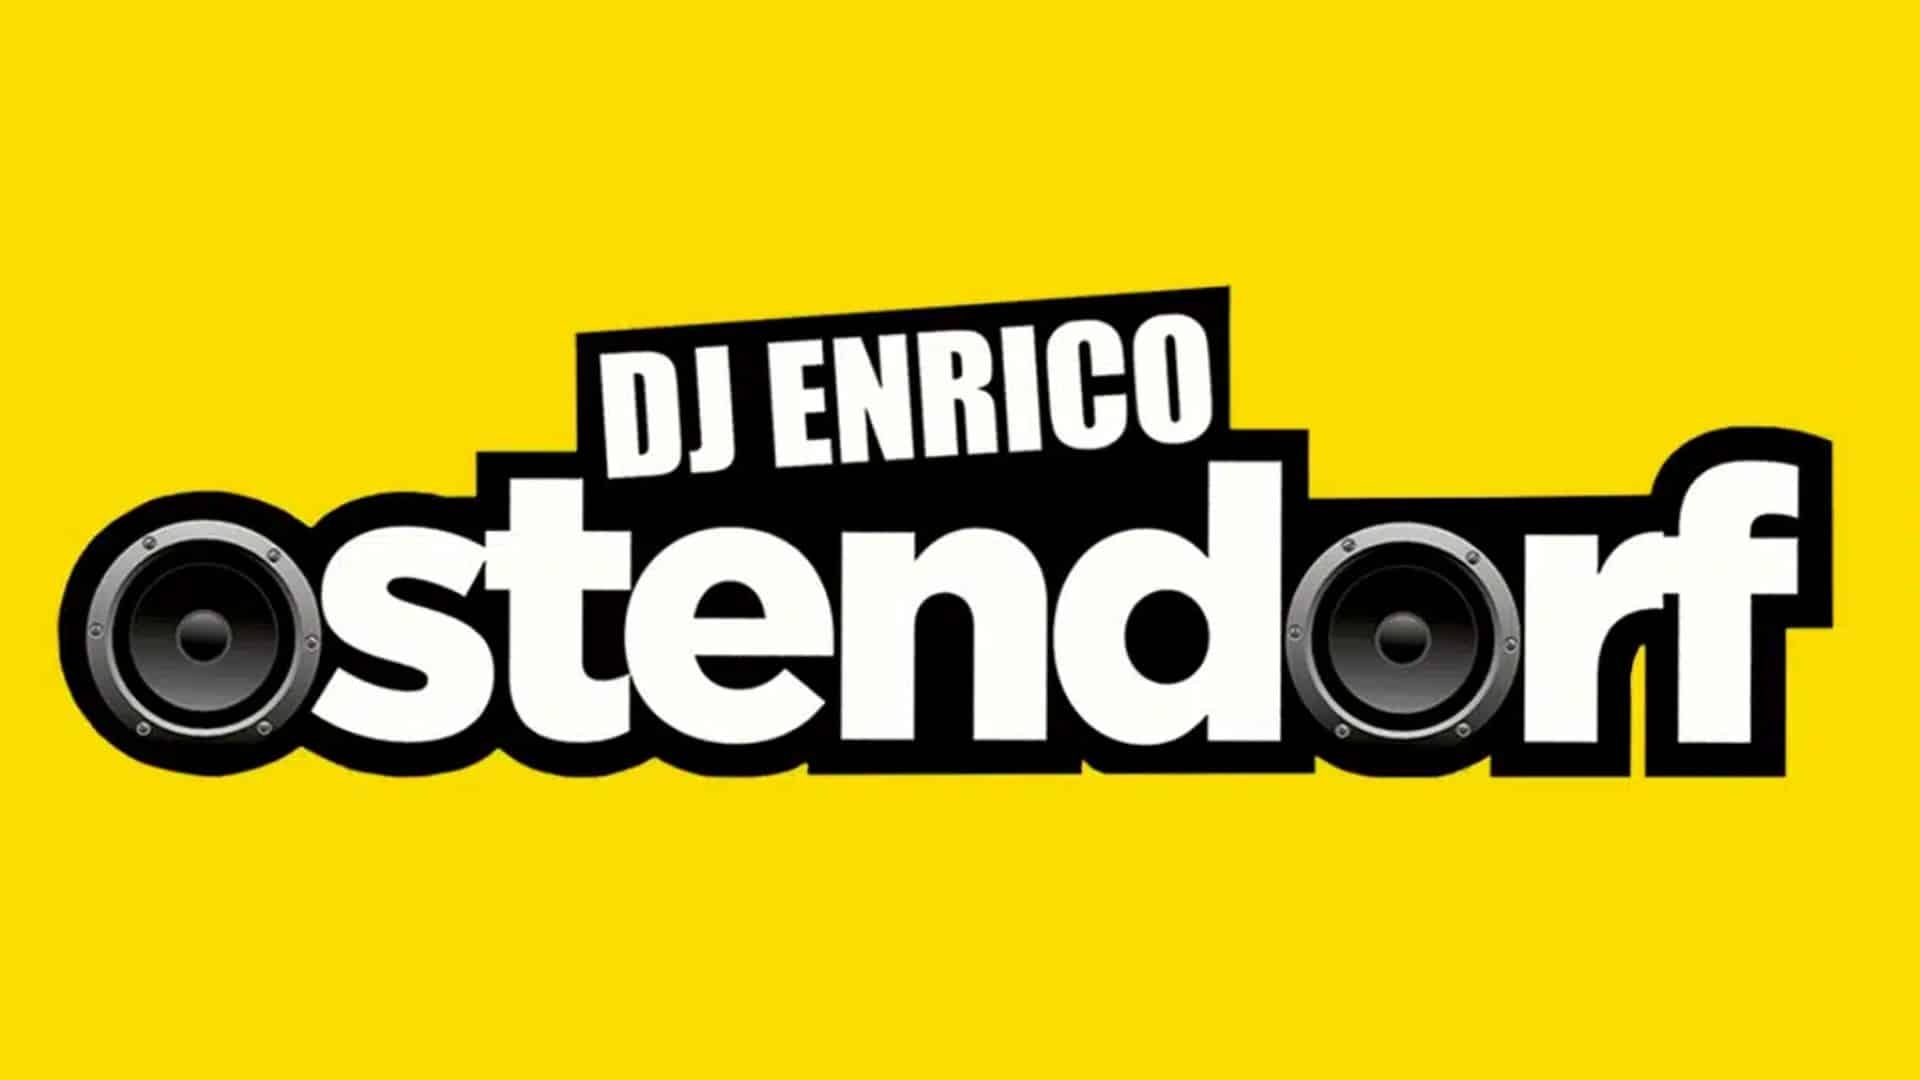 Der Party Hitmix von DJ Enrico Ostendorf 95.5 Charivari - Münchens Hitradio